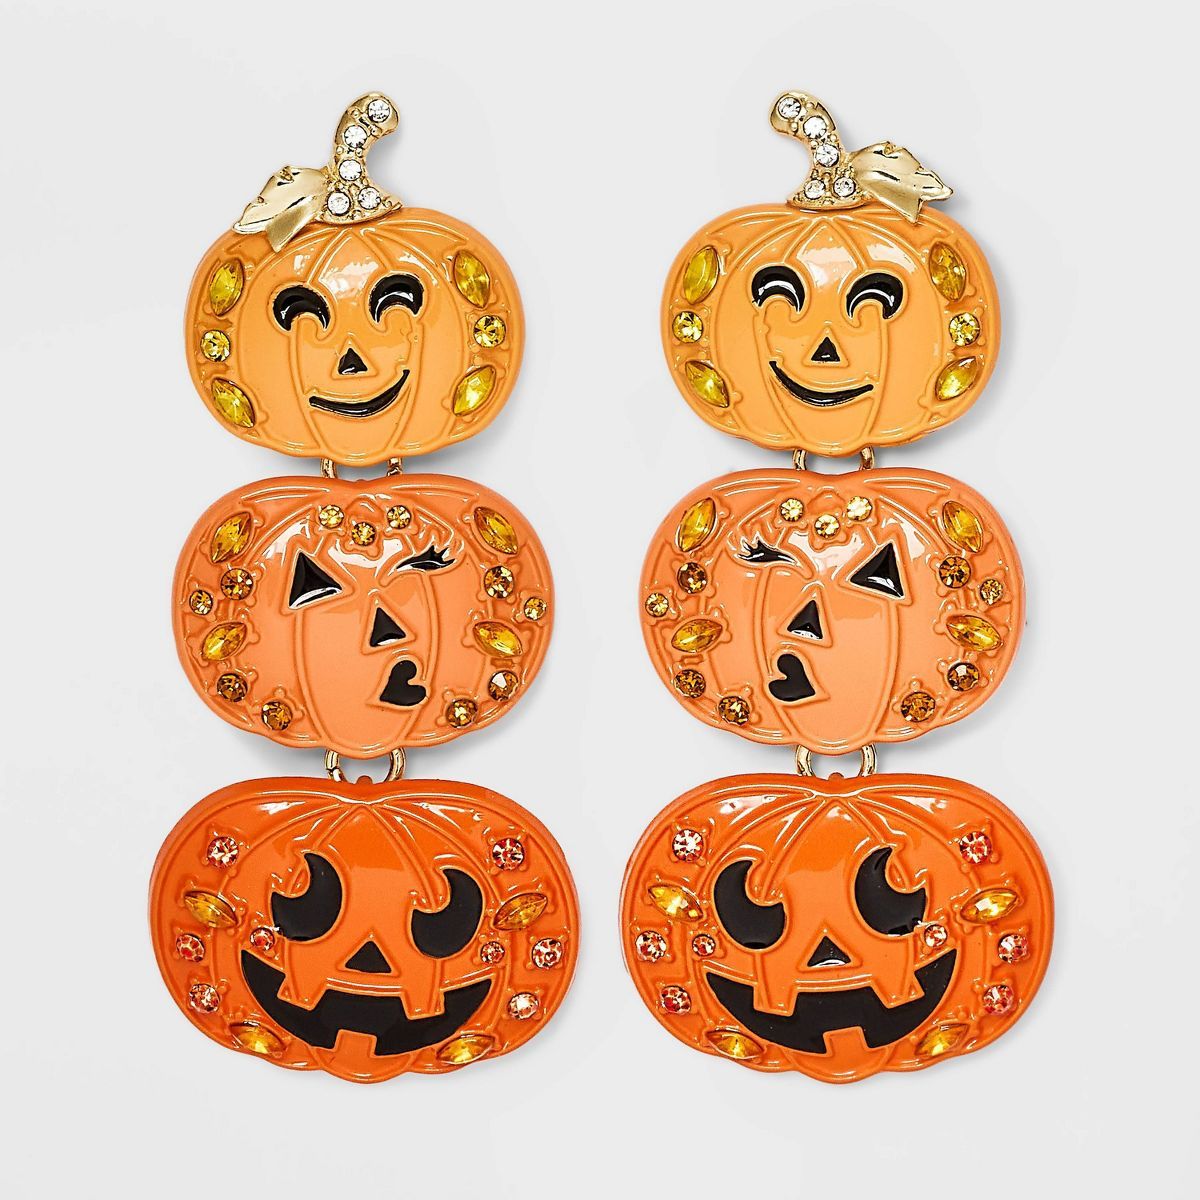 SUGARFIX by BaubleBar "Stacked Jacks" Halloween Statement Earrings - Orange | Target